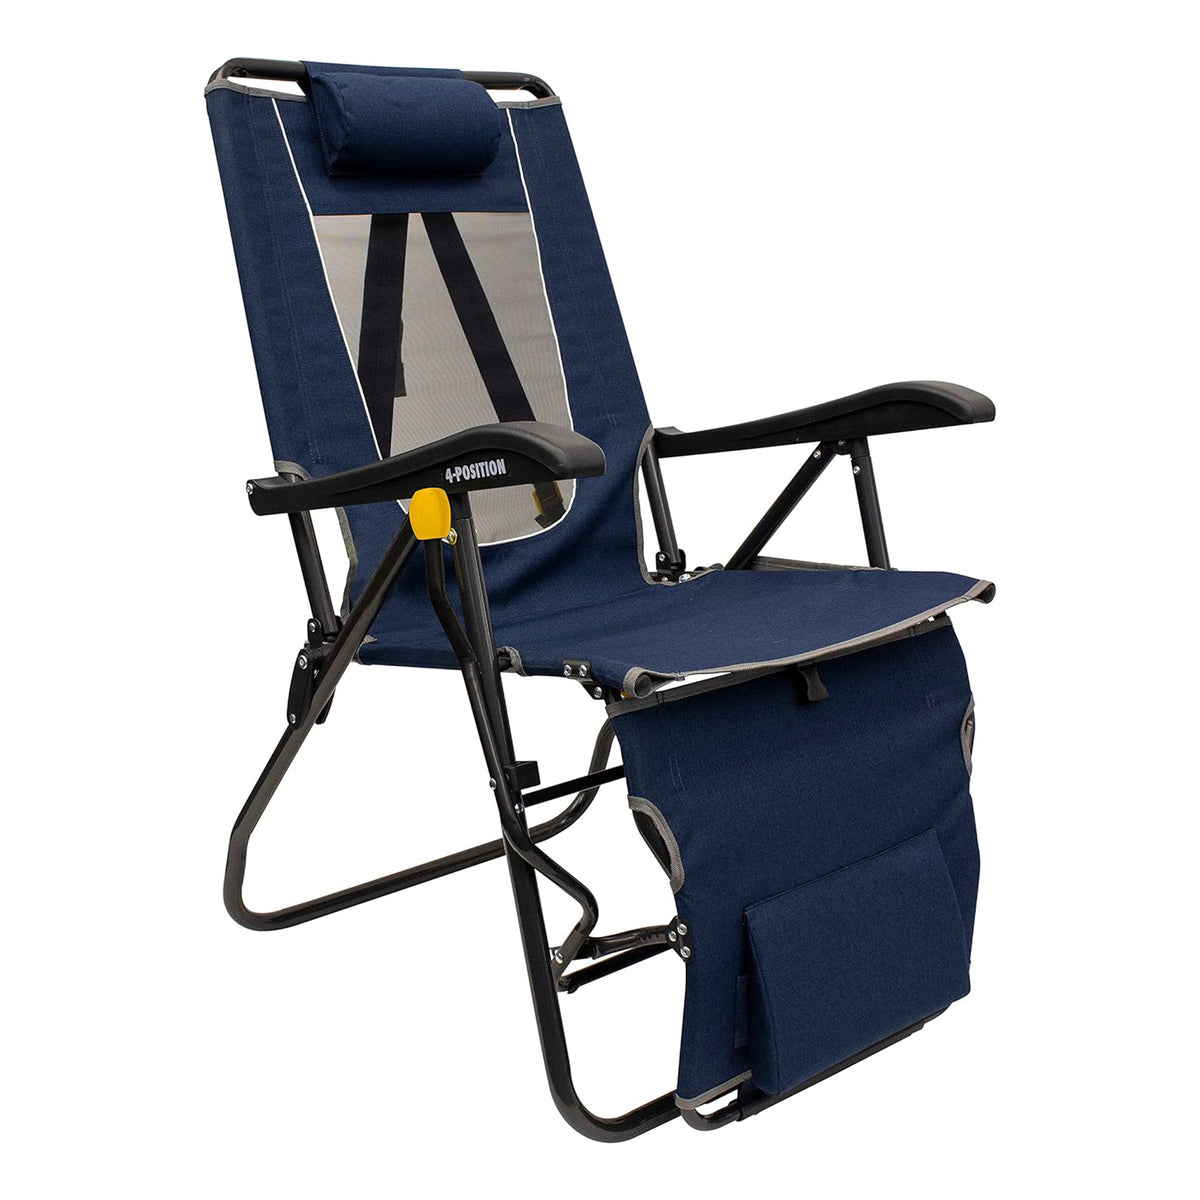 Outdoor Legz-Up-Lounger Chair